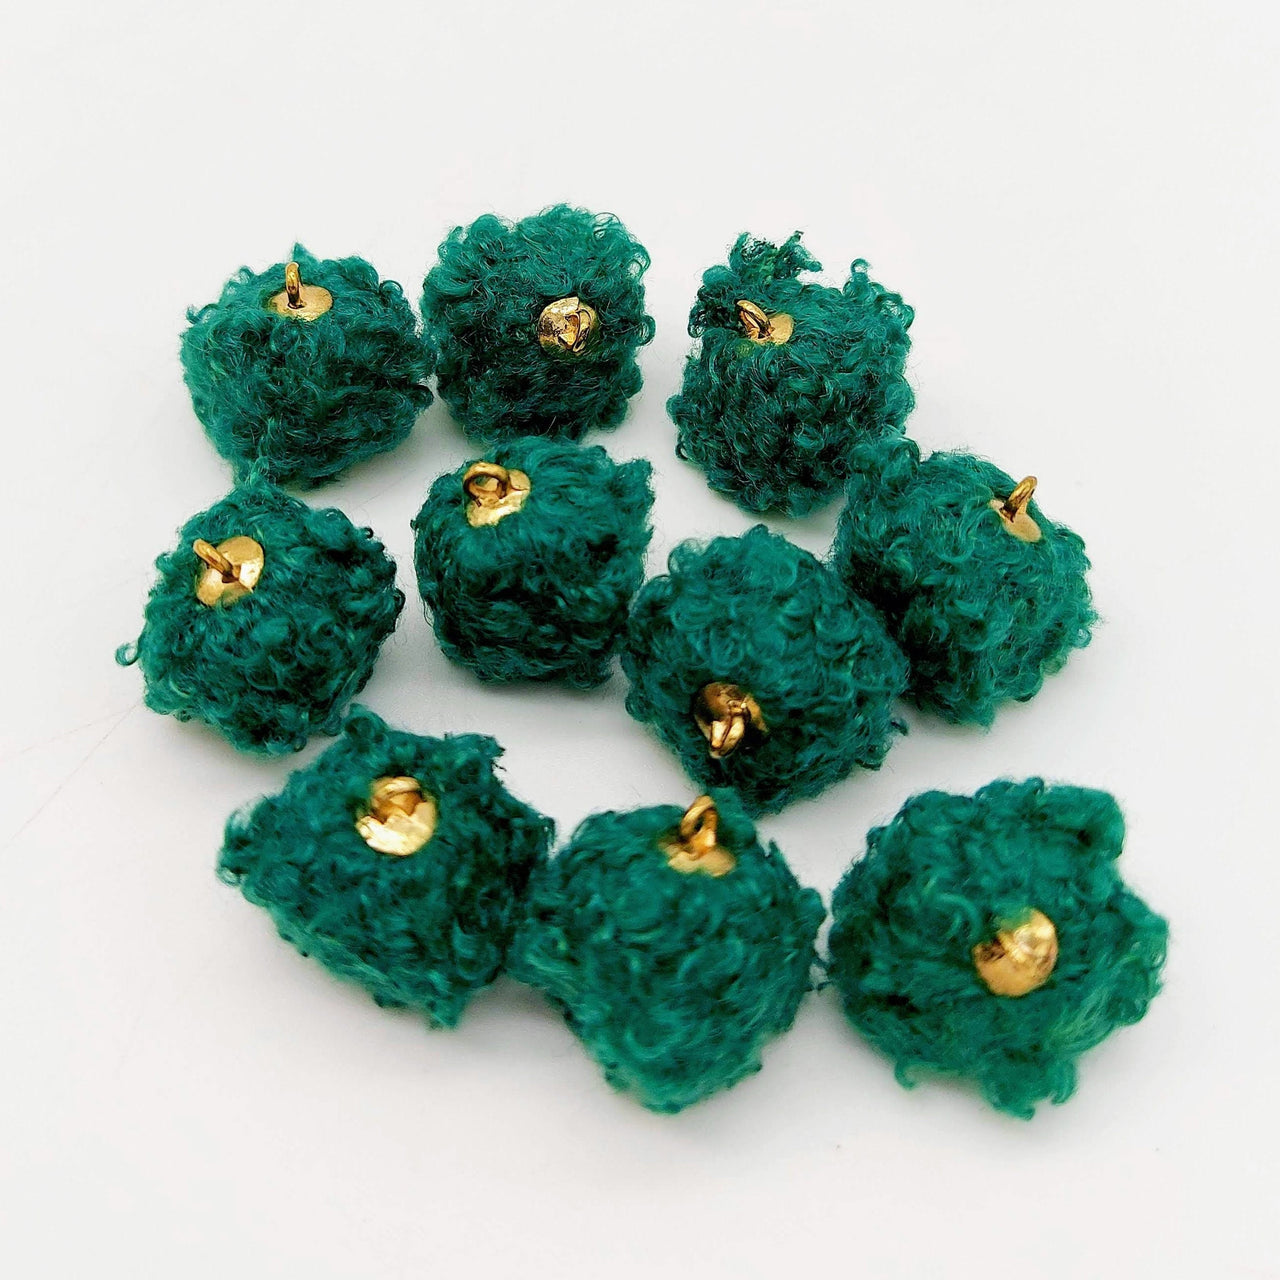 Green Fur Fabric Ball Tassel, Button with Ring Cap, Decorative Tassels